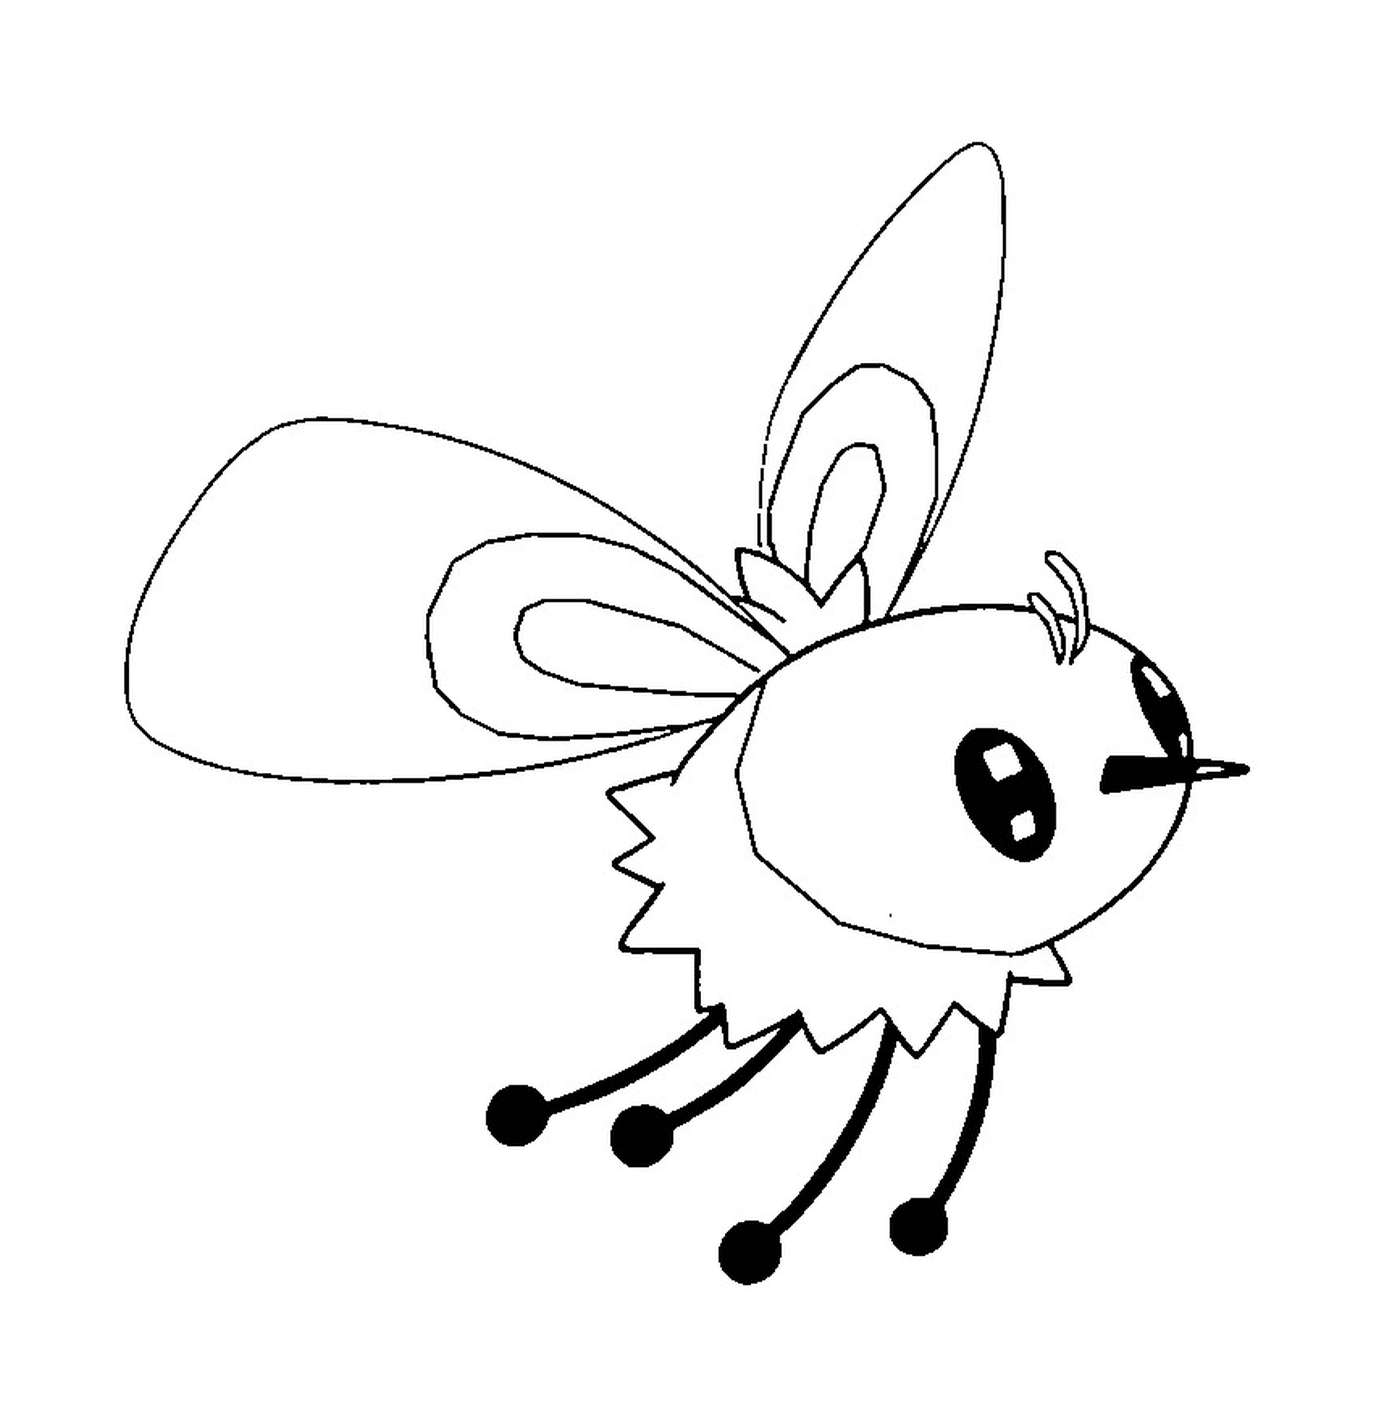  Bombydou, un insecto 